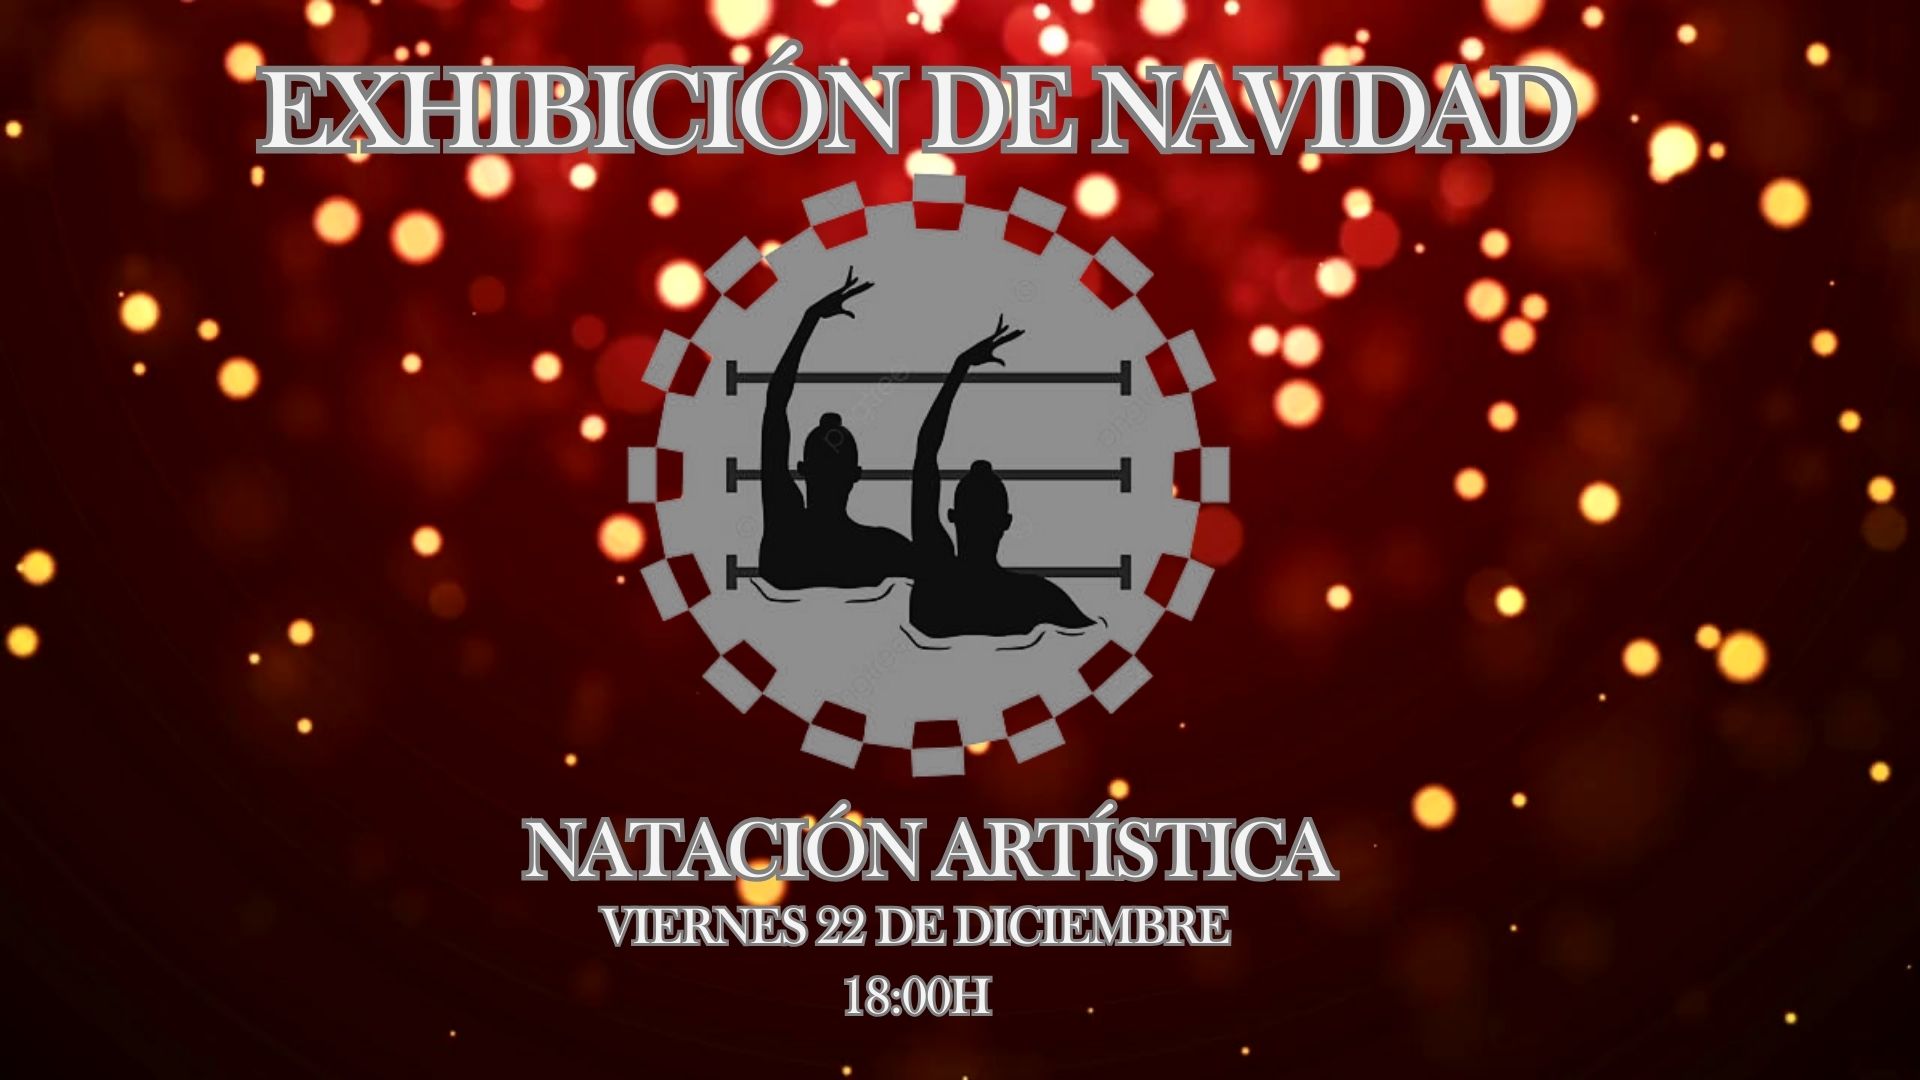 Festival de Navidad de Natacion Artistica